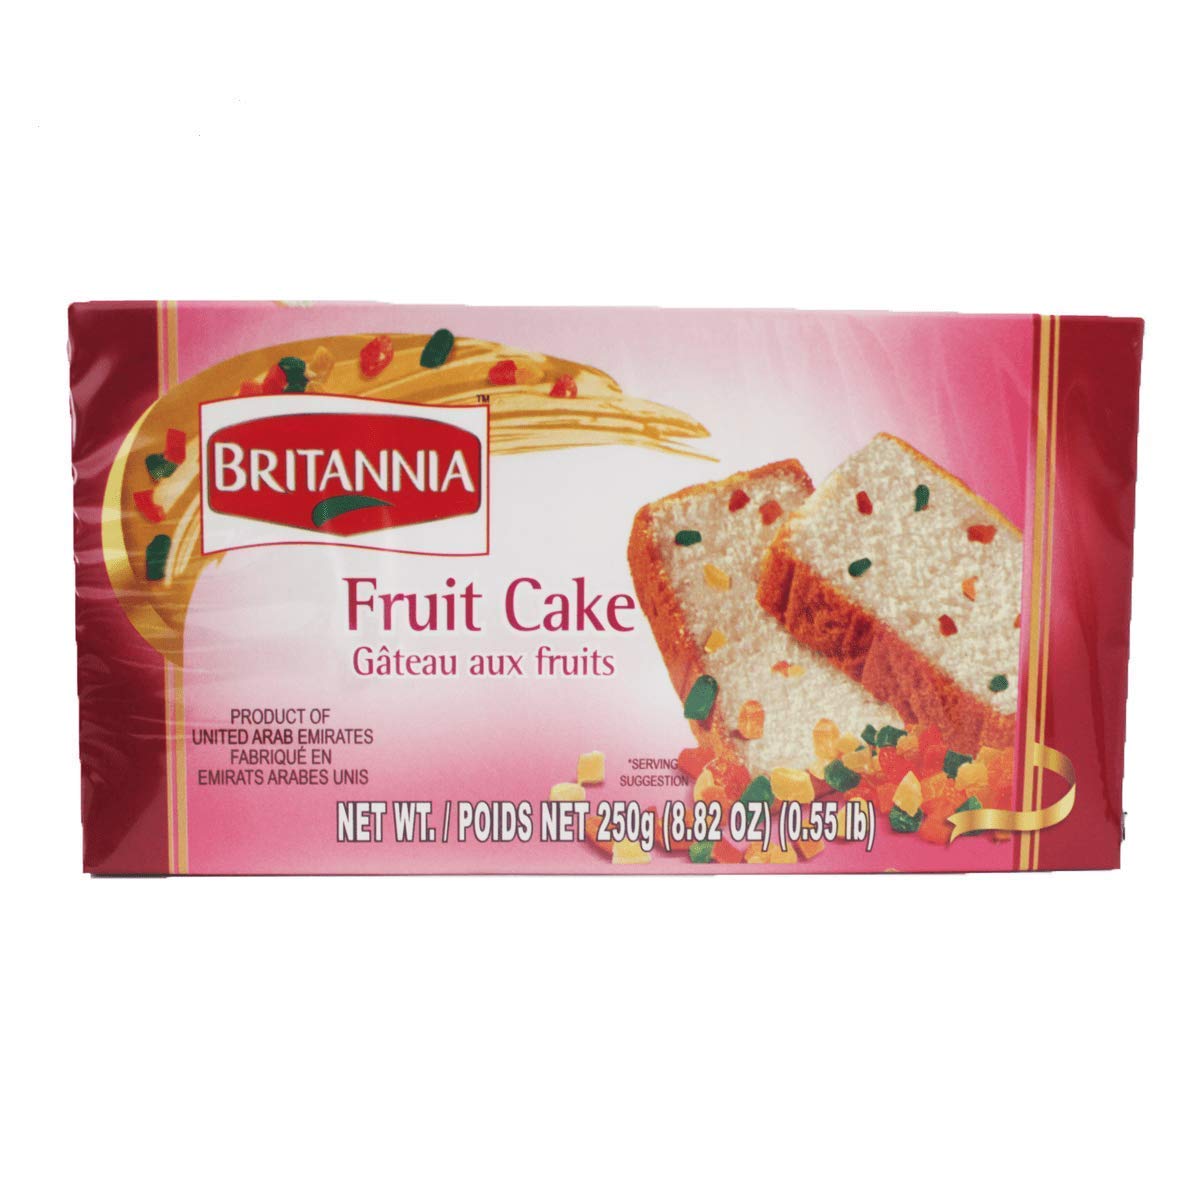 BRITANNIA CAKE ORANGE MILK AND BUTTER FLAVORS OPENING - YouTube